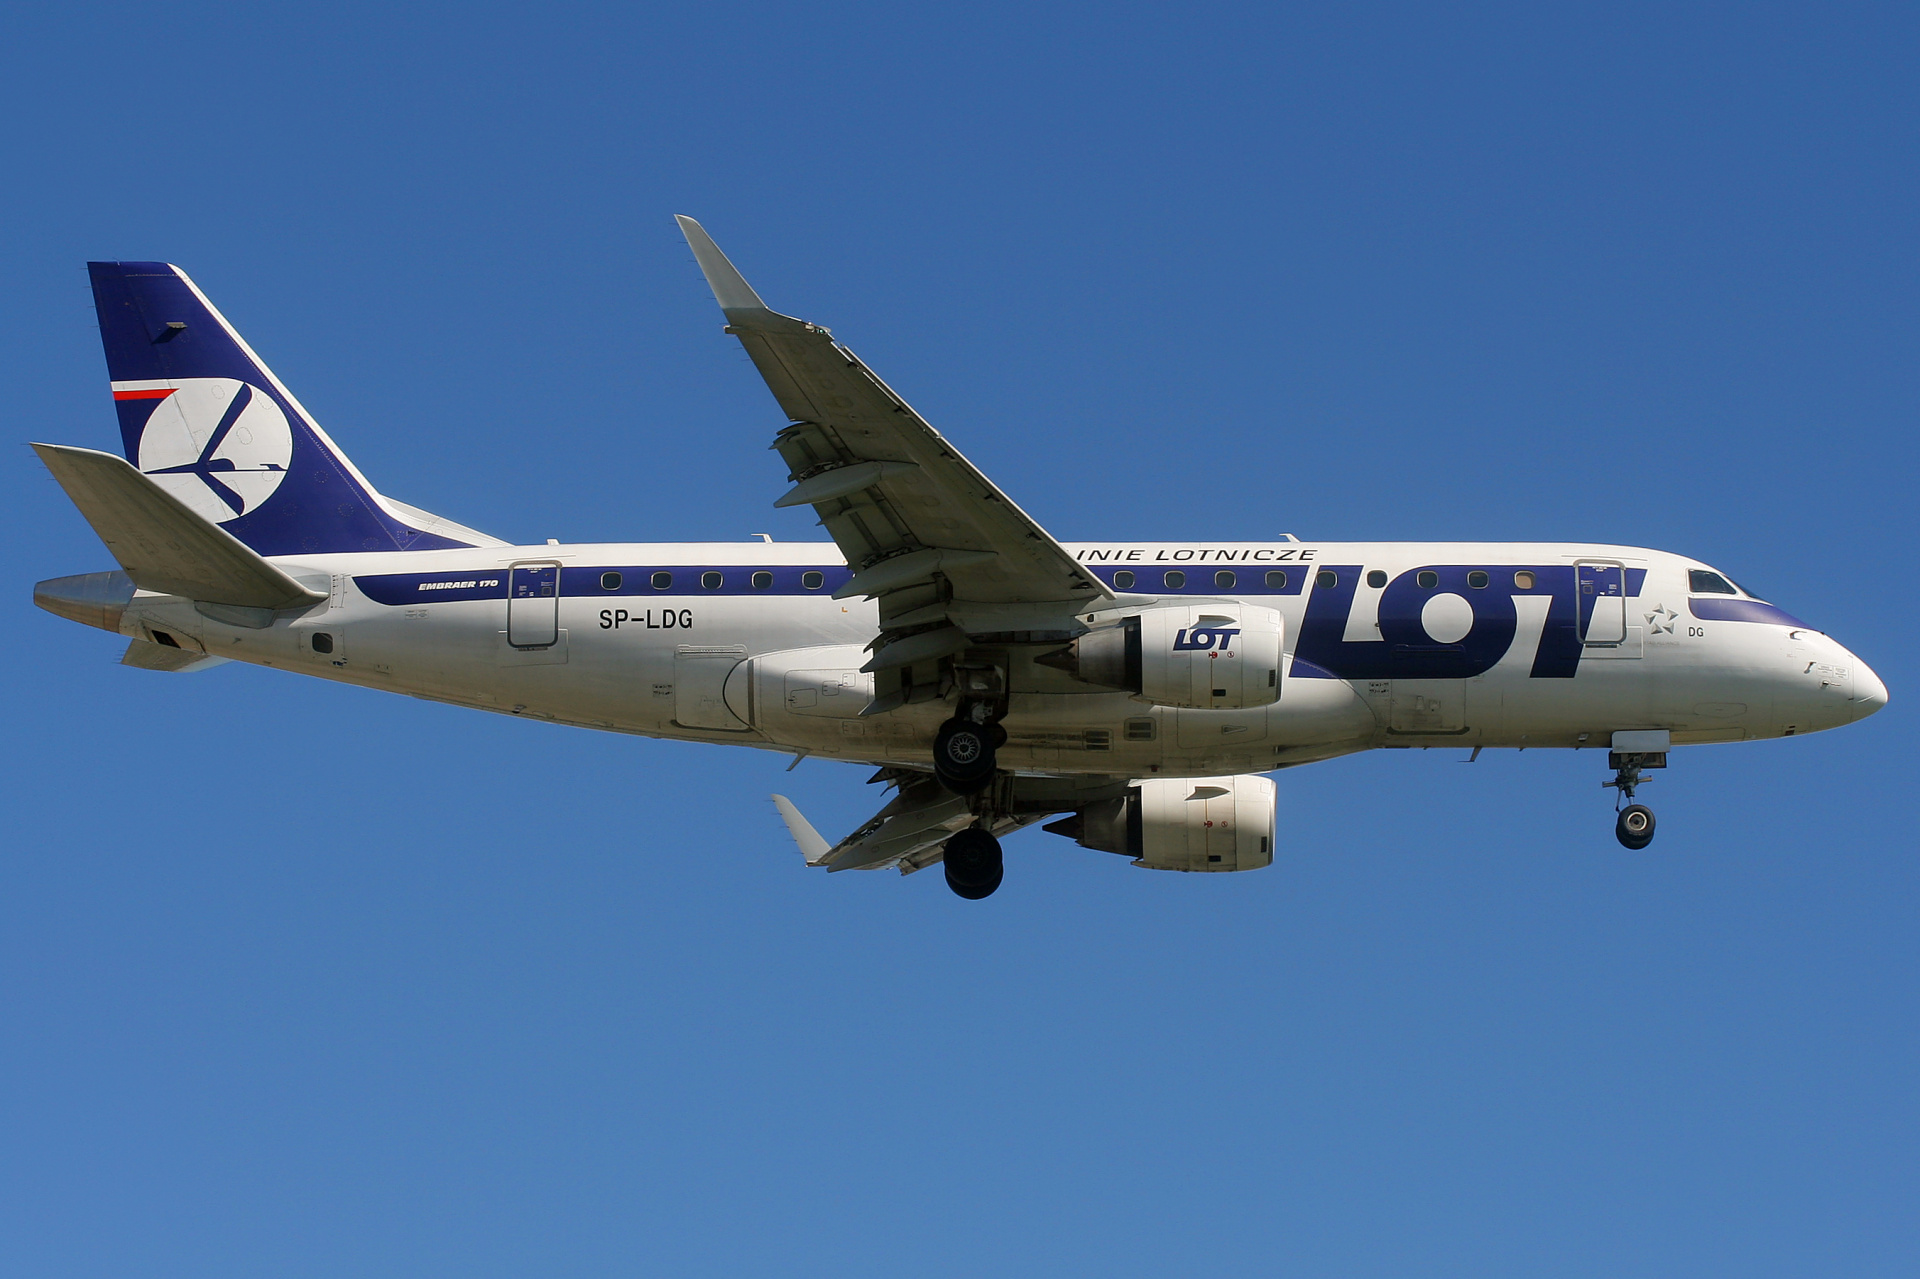 SP-LDG (Aircraft » EPWA Spotting » Embraer E170 » LOT Polish Airlines)